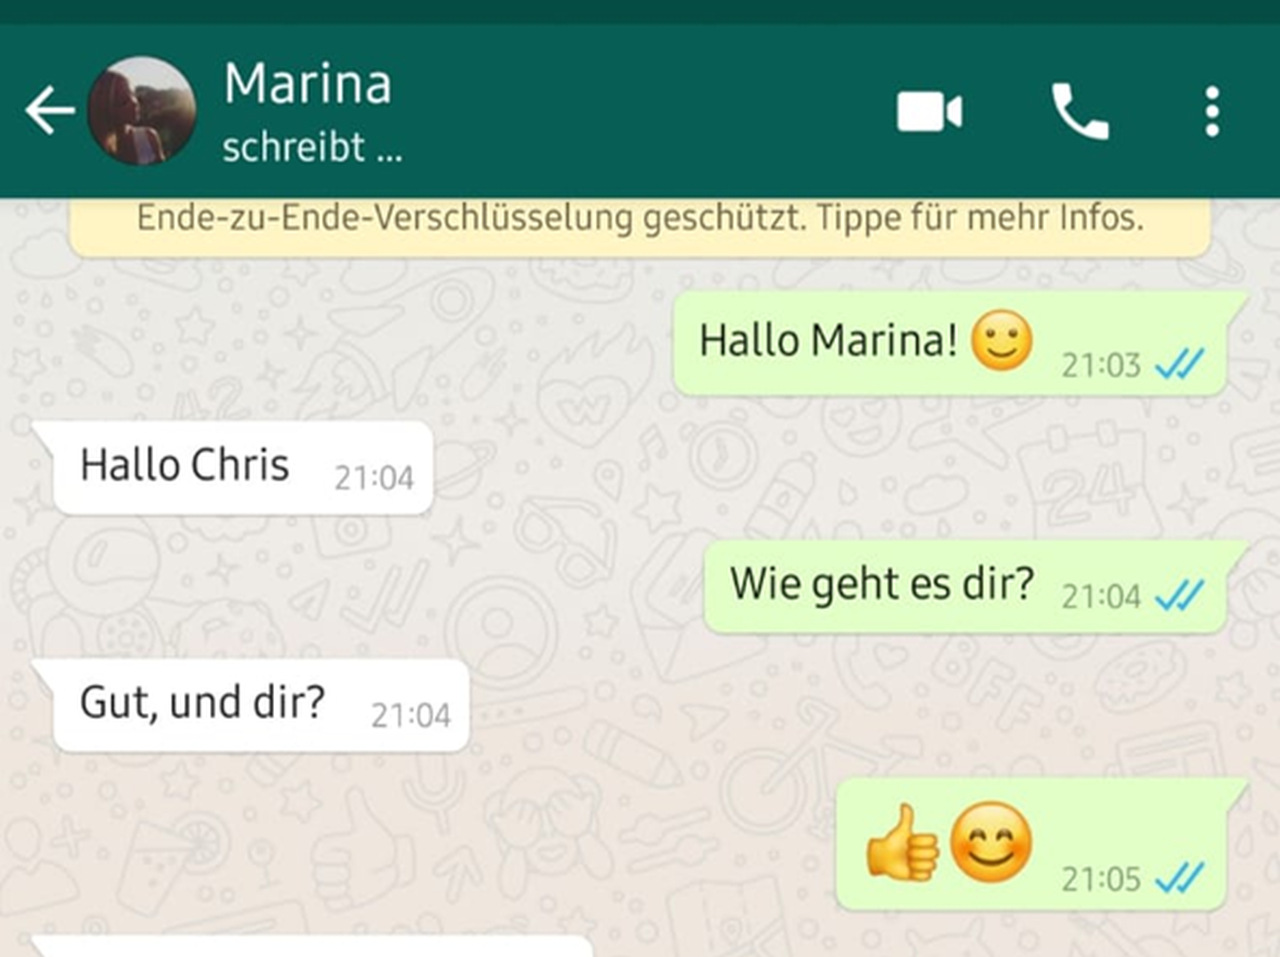 Slika prikazuje čavrljanje između Marine i Chris. Chris piše prva: Hallo Marina (emoticon: lustig) Hallo Chris Wie geht es dir? Gut, und dir? Emoticon: es gefällt mir und lustig.